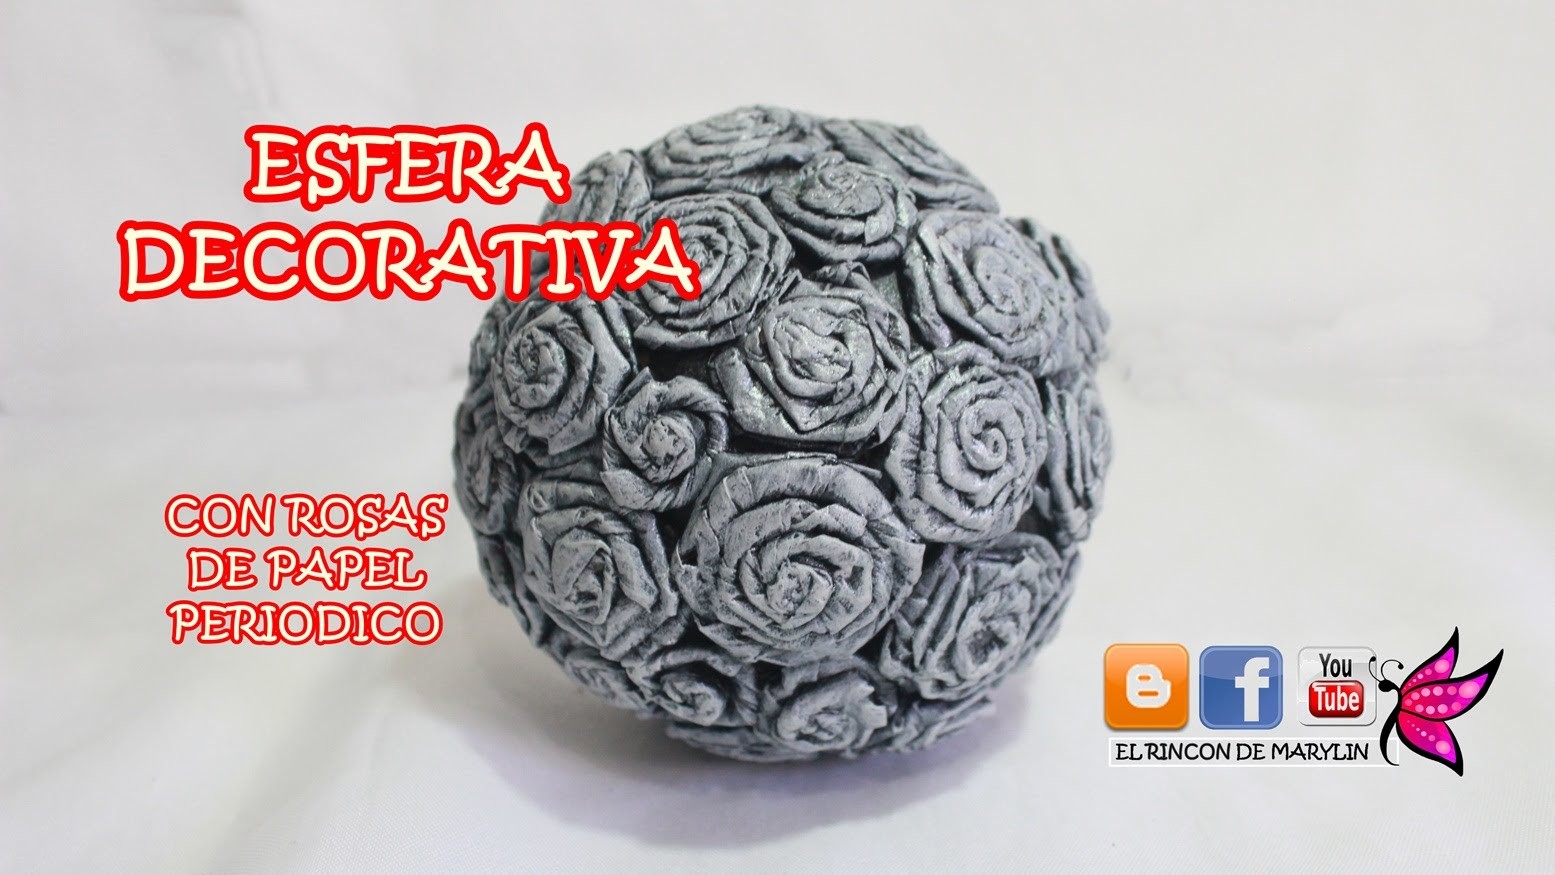 ESFERA DECORATIVA CON ROSAS DE PAPEL PERIODICO -  Decorative sphere with pink newsprint